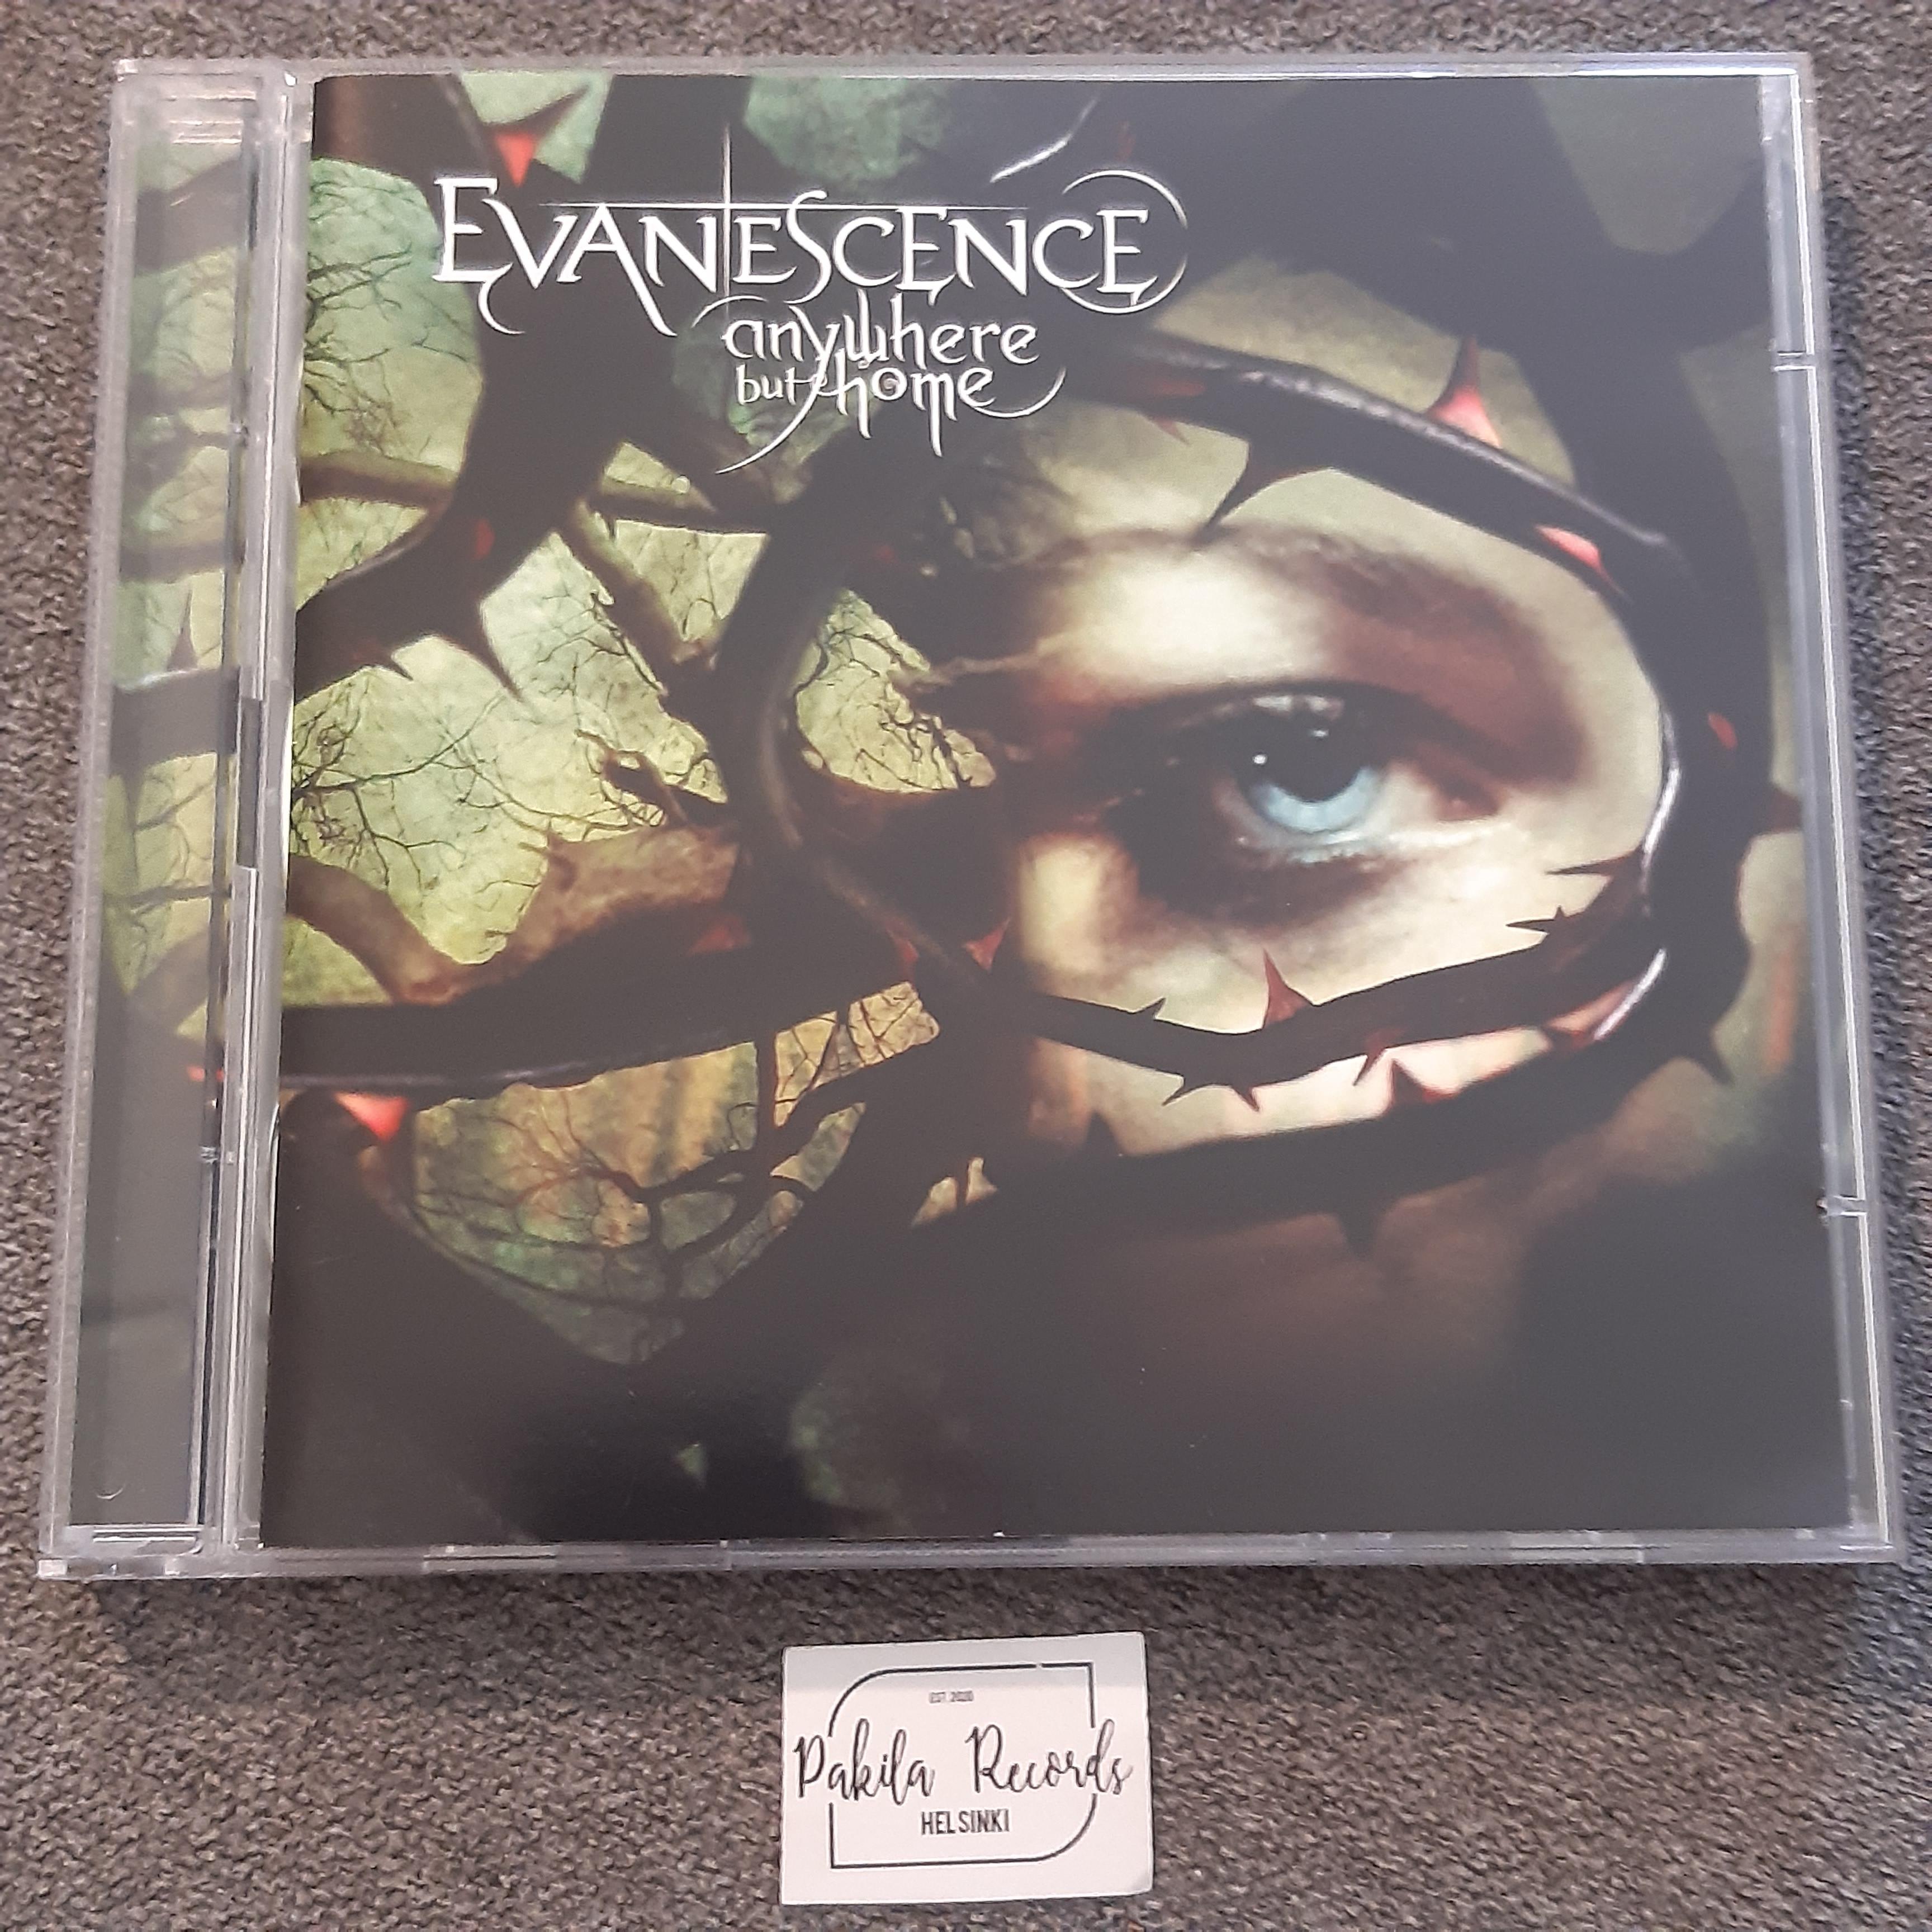 Evanescence - Anywhere But Home - CD + DVD (käytetty)